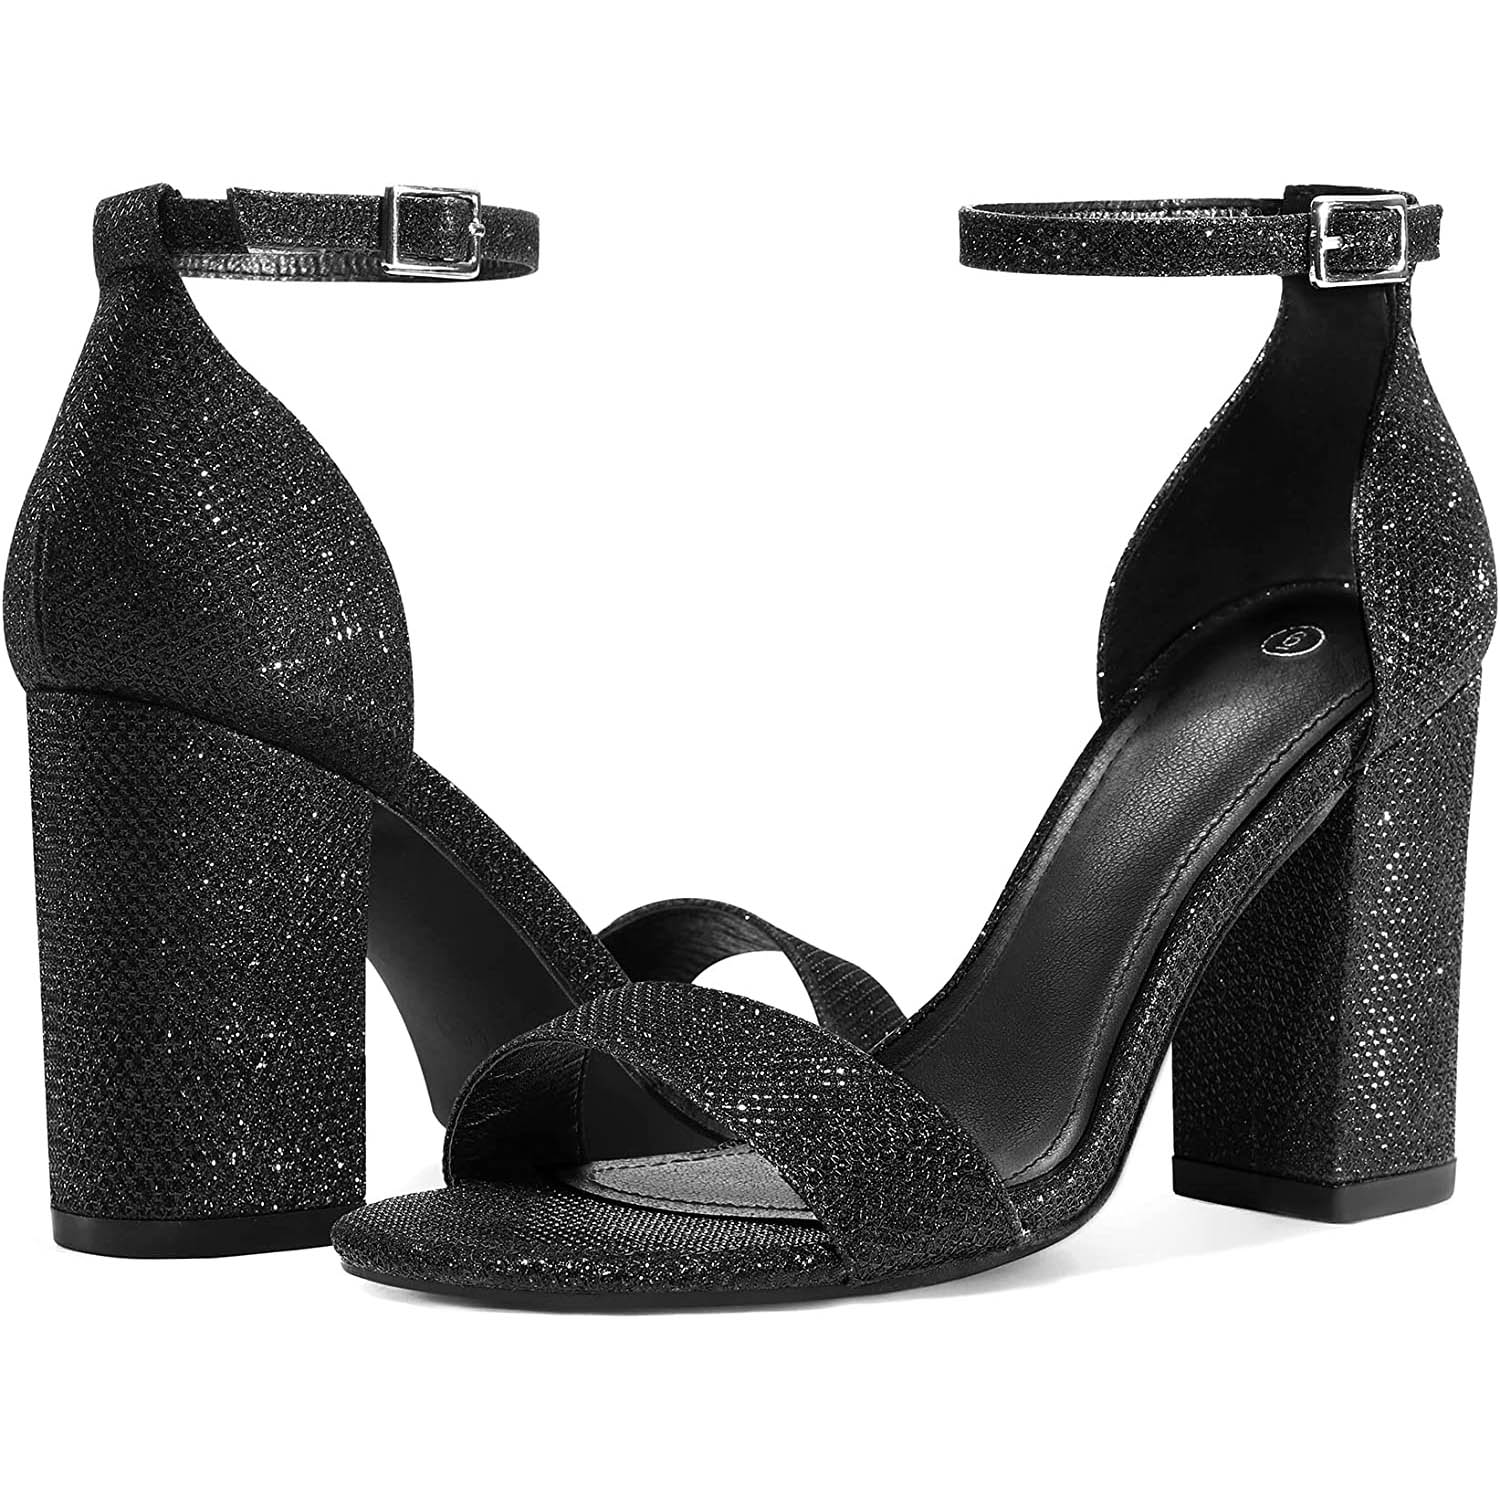 Mix No 6 Mary Jane Block Heels Size 10.5 Black Glitter Special Occasion Heel  | eBay